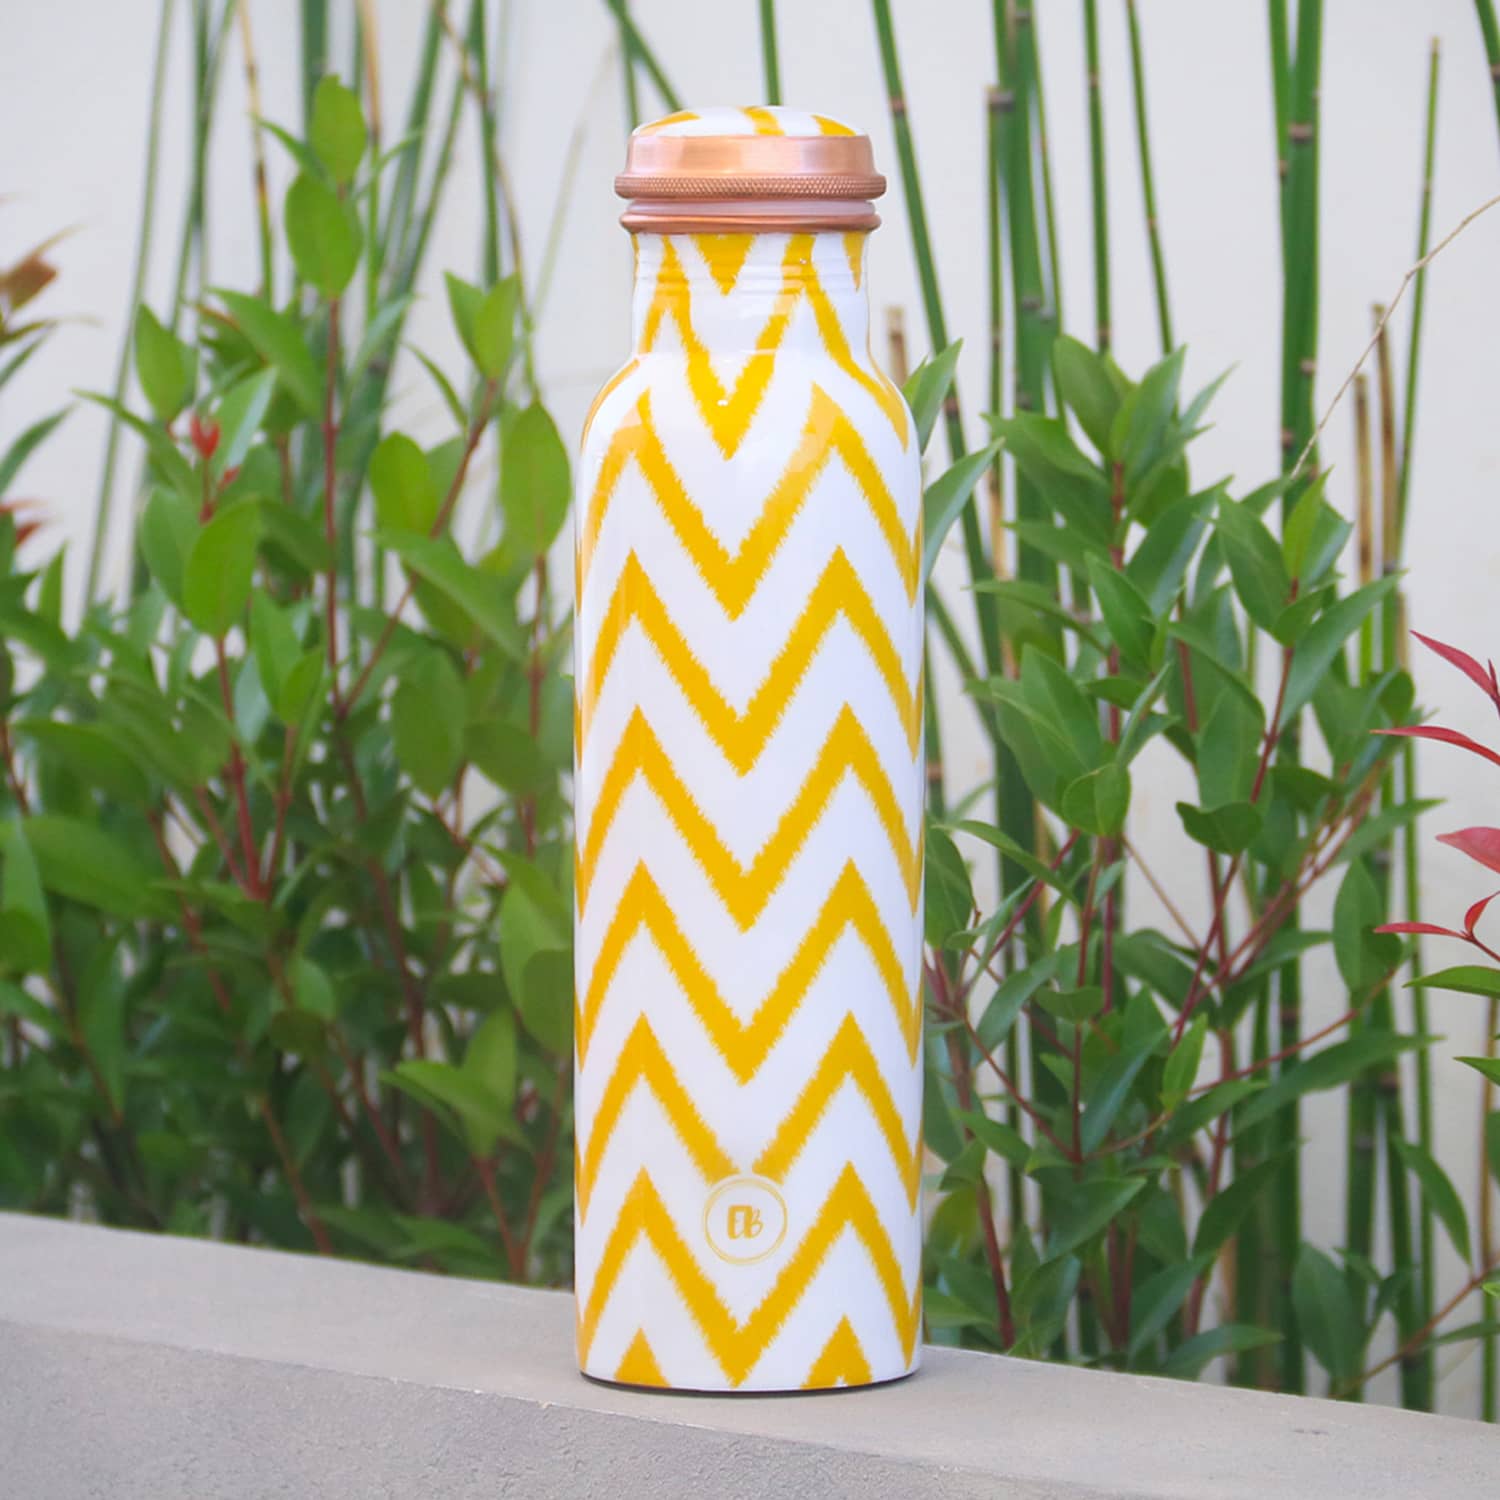 yellow zig zag design copper bottle copper water bottle 1 litre printed copper bottle benefits of copper water #color_yellow zigzag